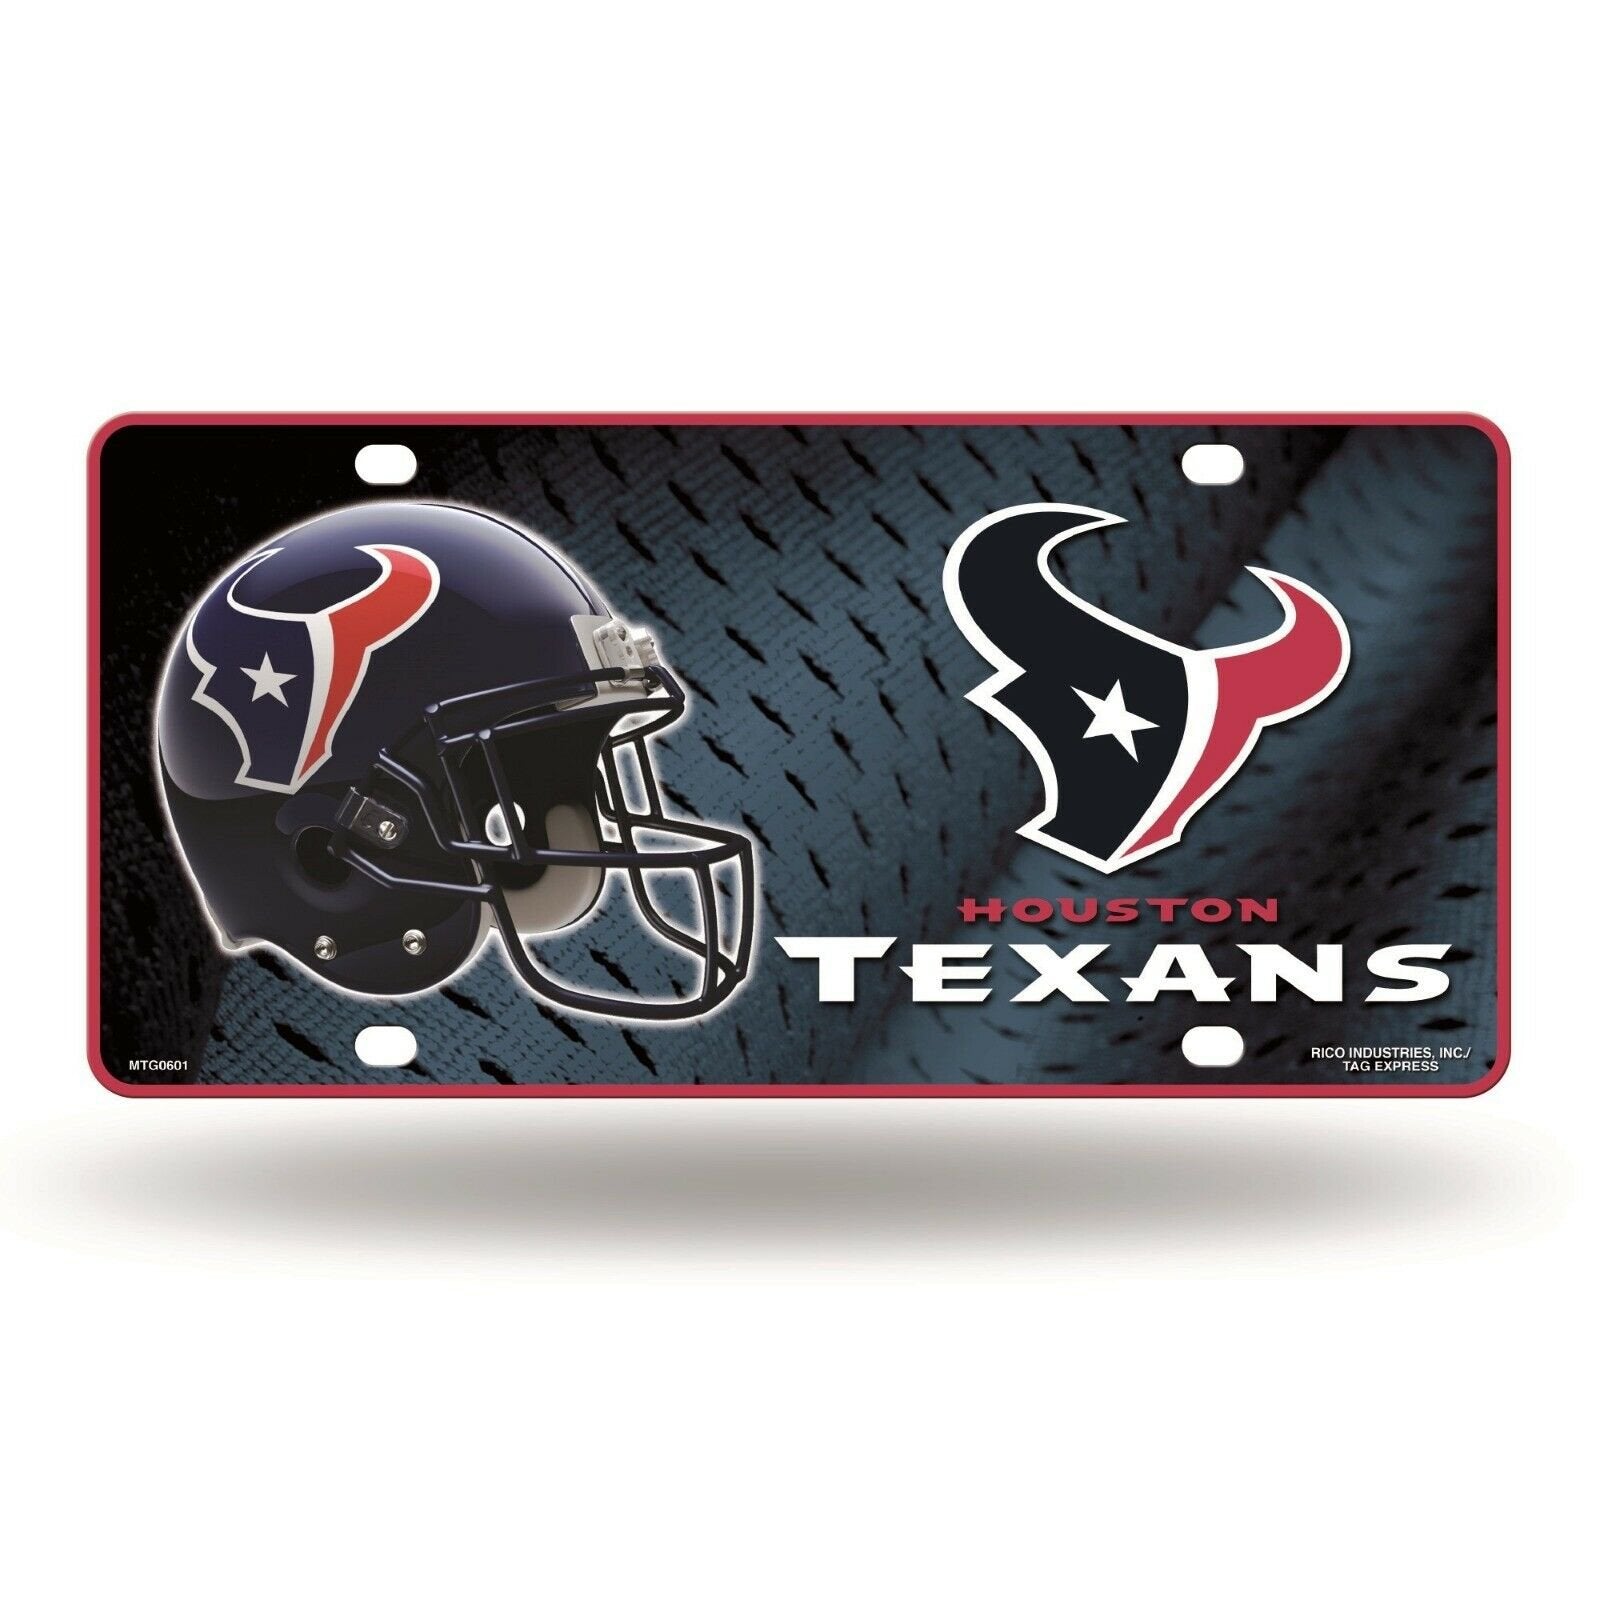 Houston Texans Metal Auto Tag License Plate, Helmet Design, 6x12 Inch